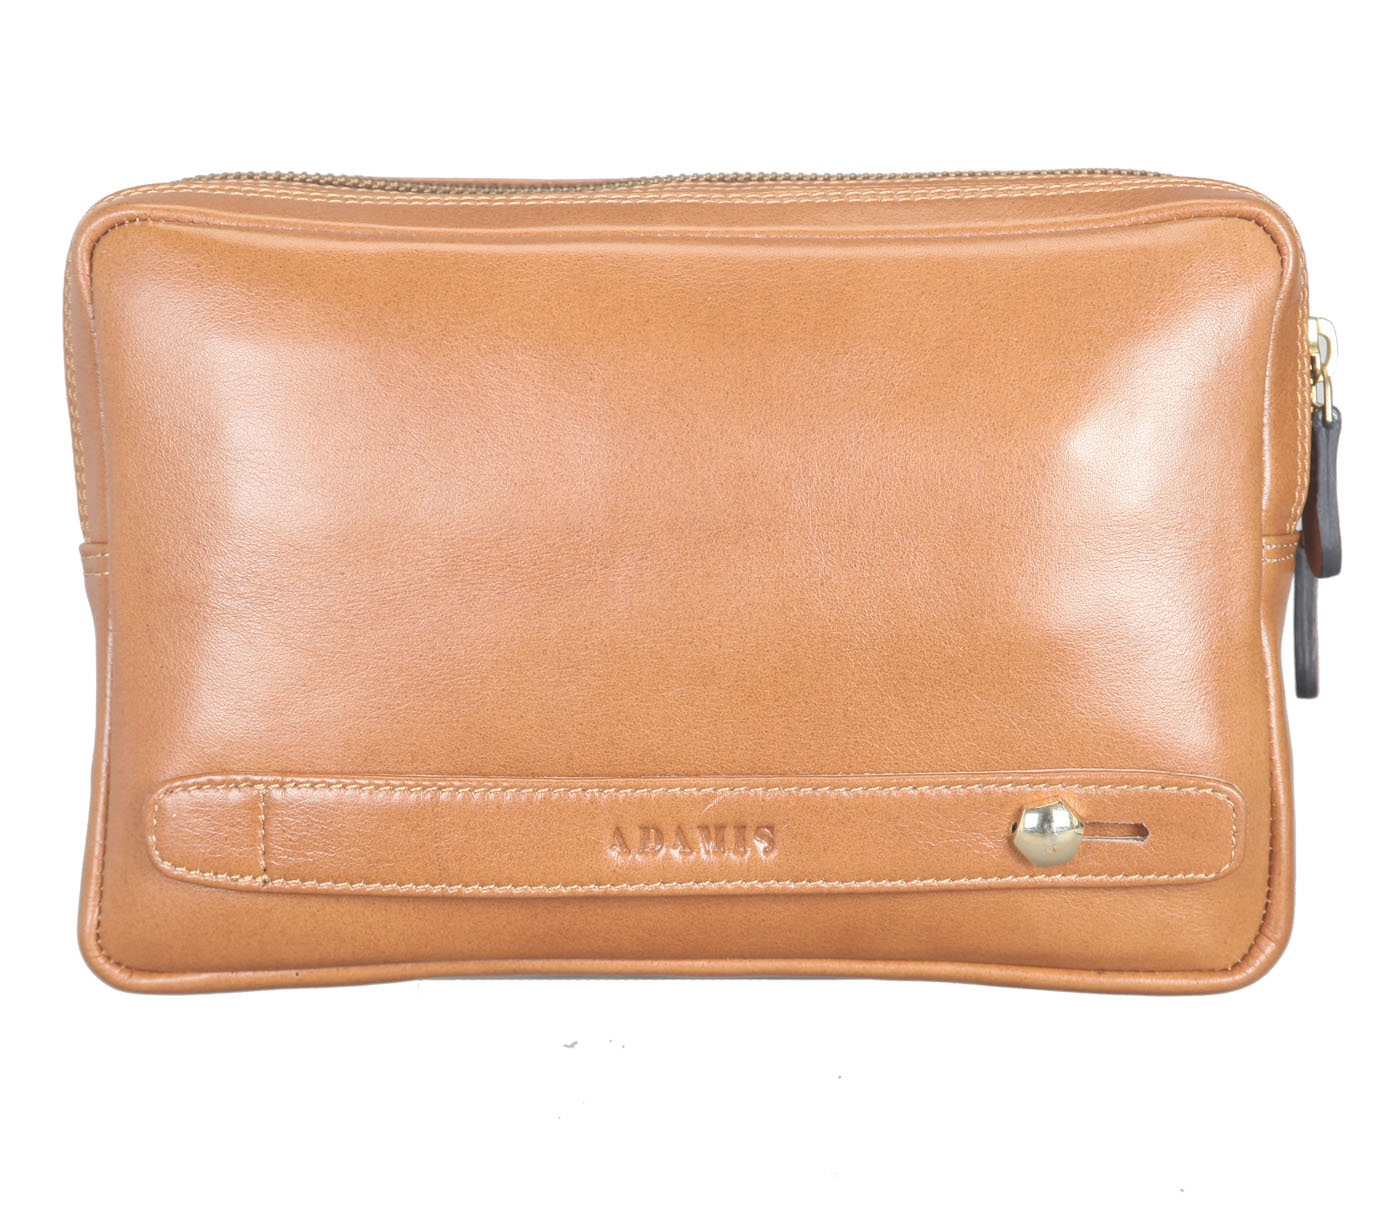 P32-Jesse-Men's bag cum travel pouch in Genuine Leather - Tan